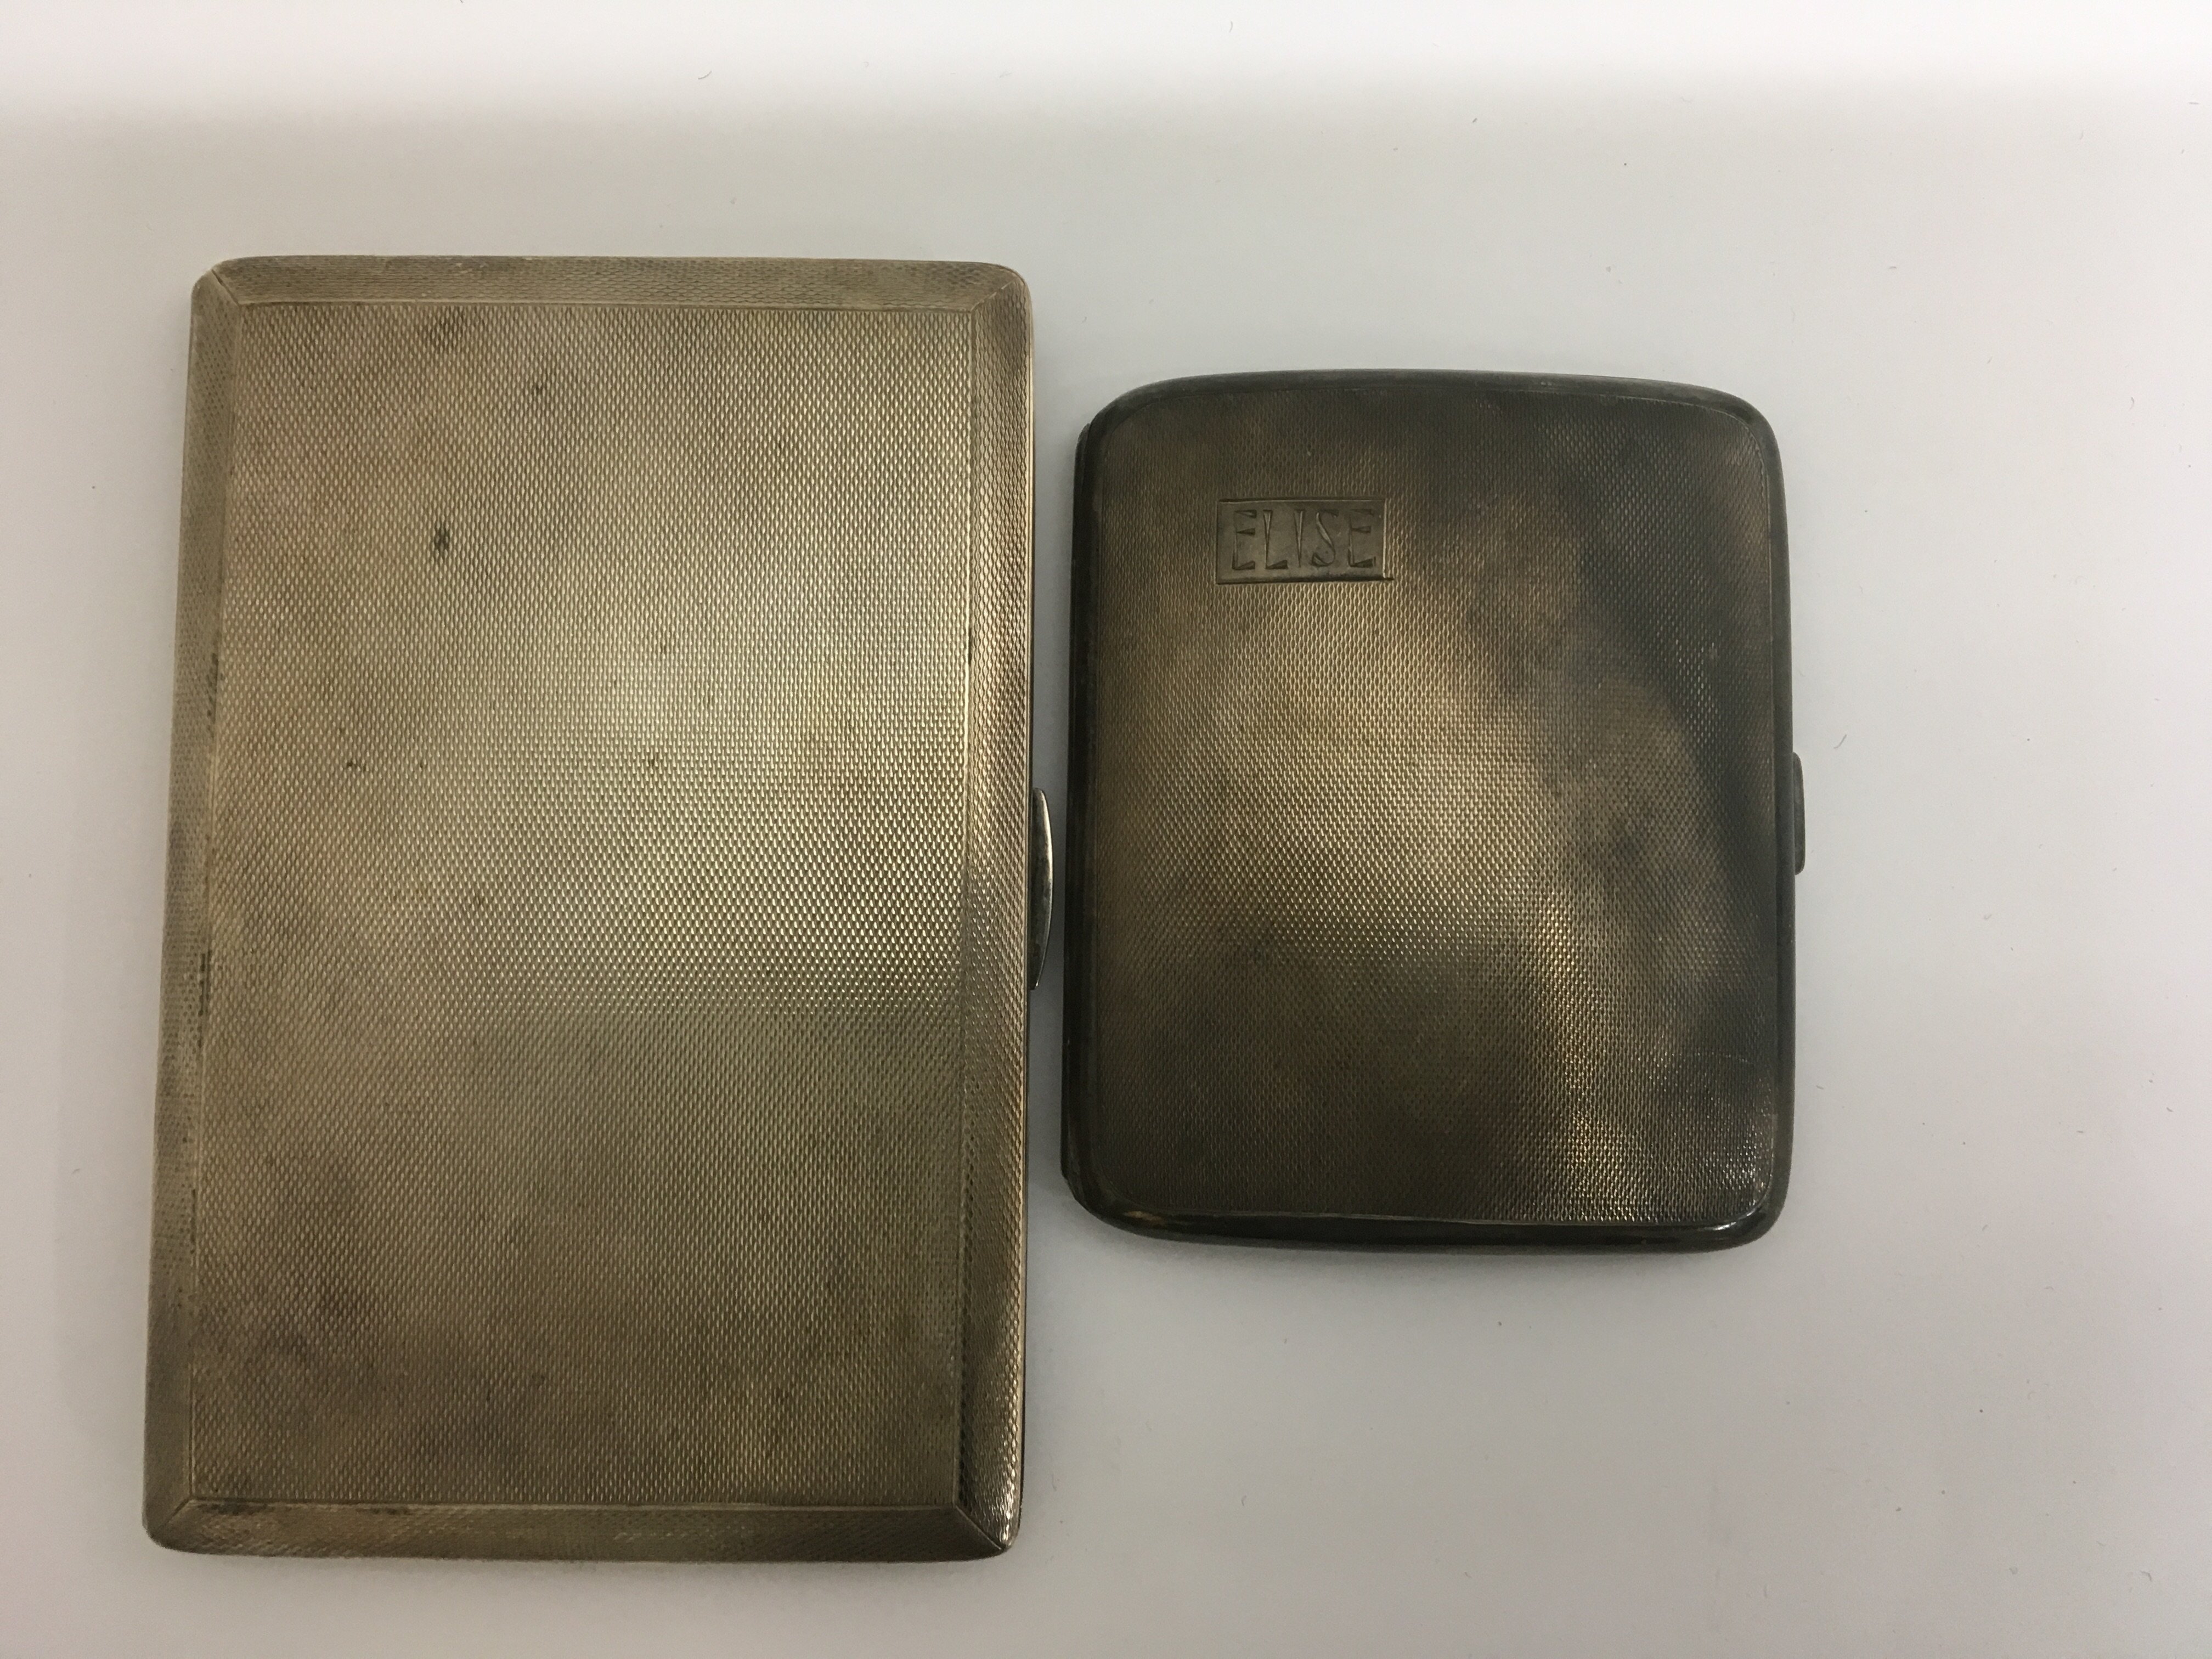 Two silver cigarette cases 245 grams